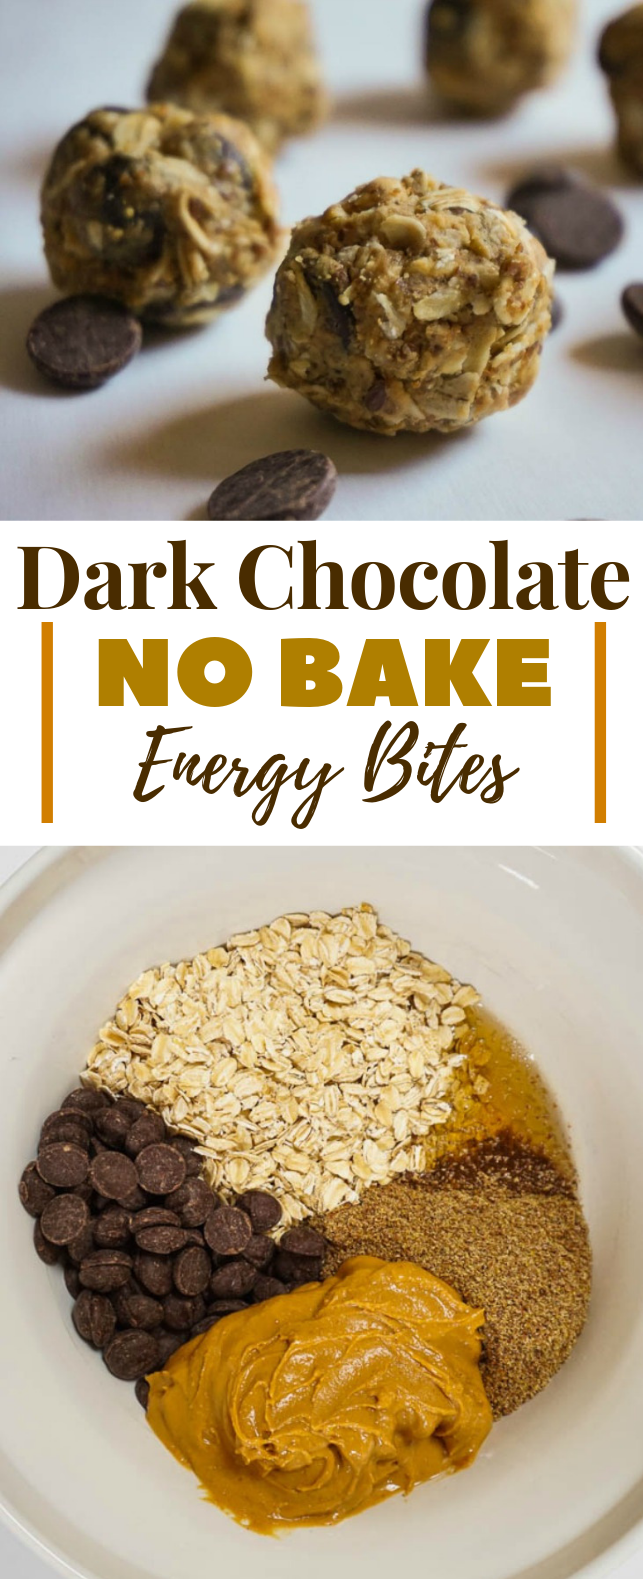 DARK CHOCOLATE NO BAKE ENERGY BITES #healthy #breakfast